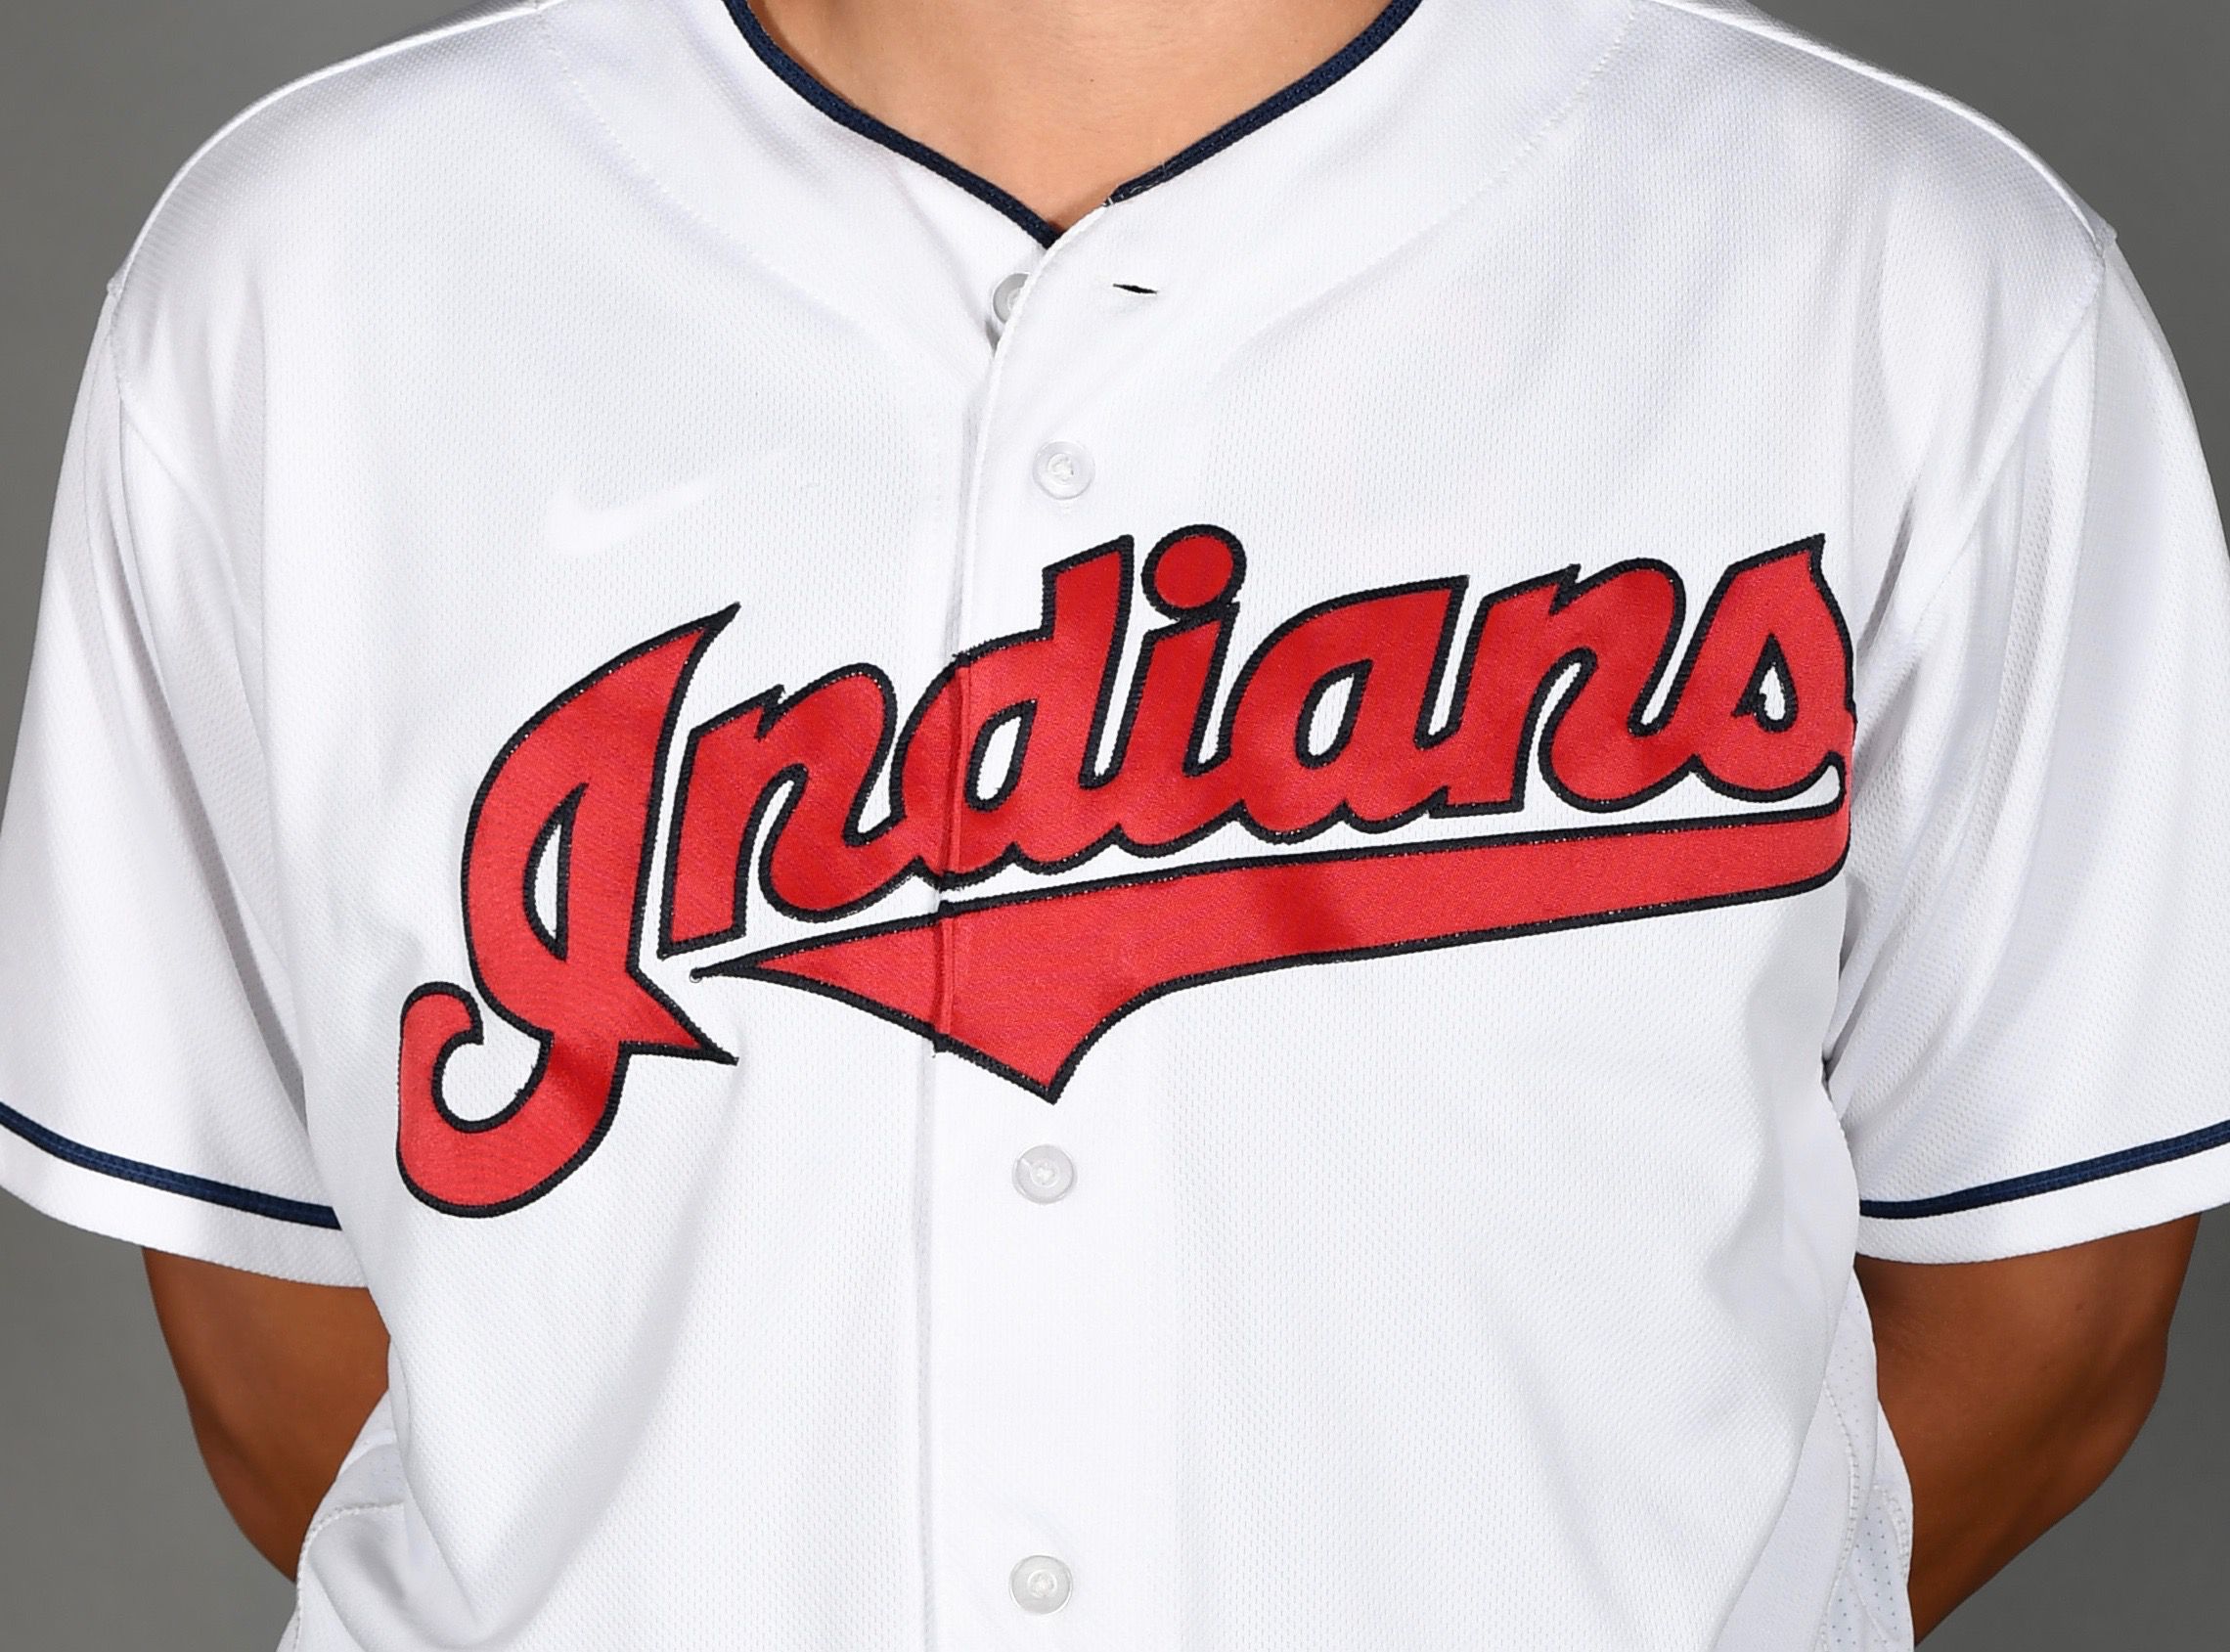 Cleveland Indians - Page 3 of 3 - Cheap MLB Baseball Jerseys